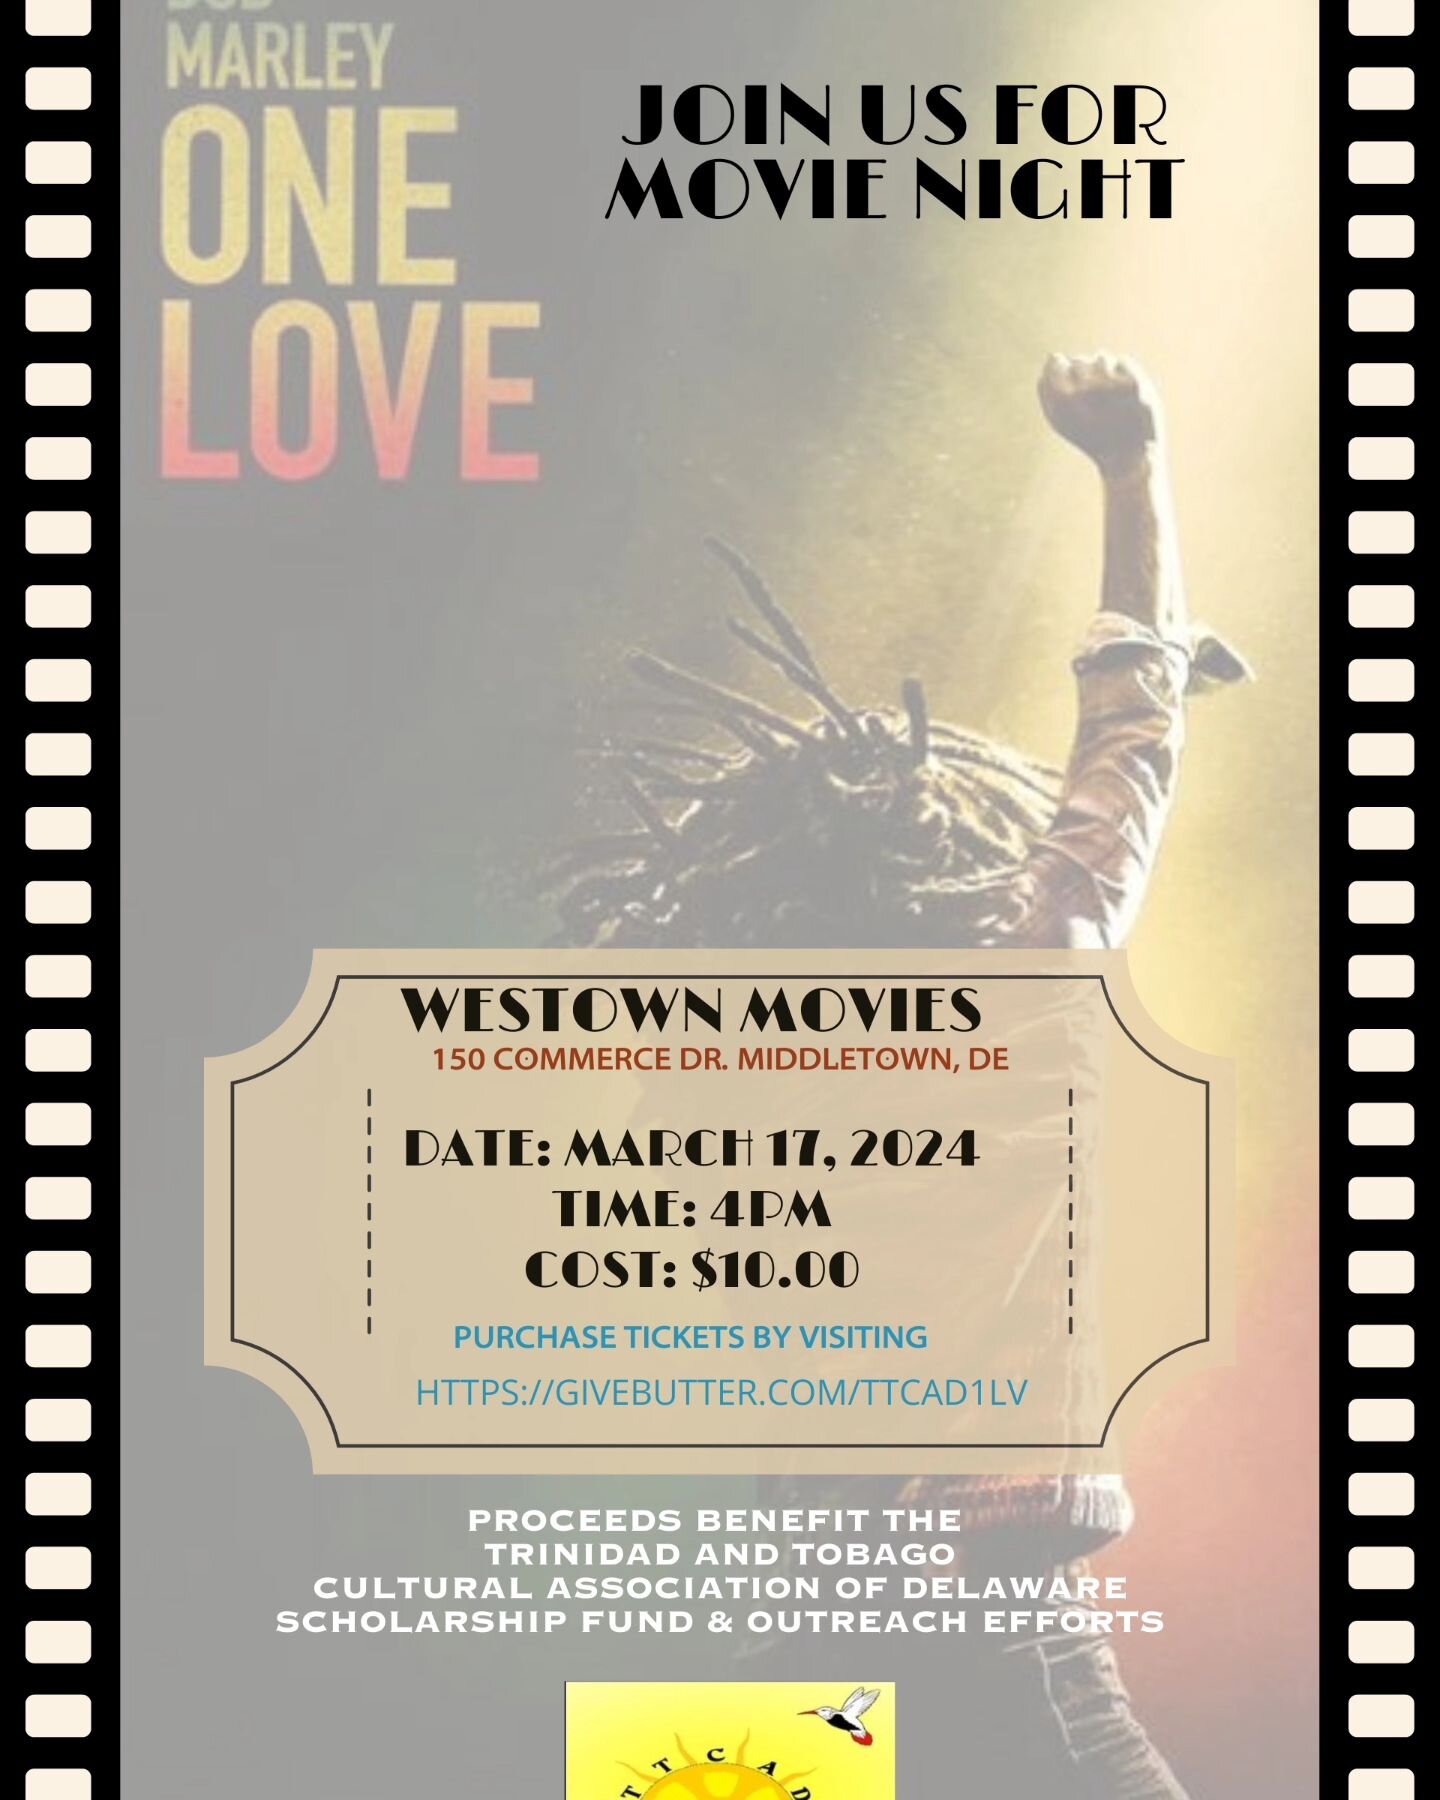 JOIN Us for Movie Night!!! #bobmarley #one love #ttcad #trinidad #movienight